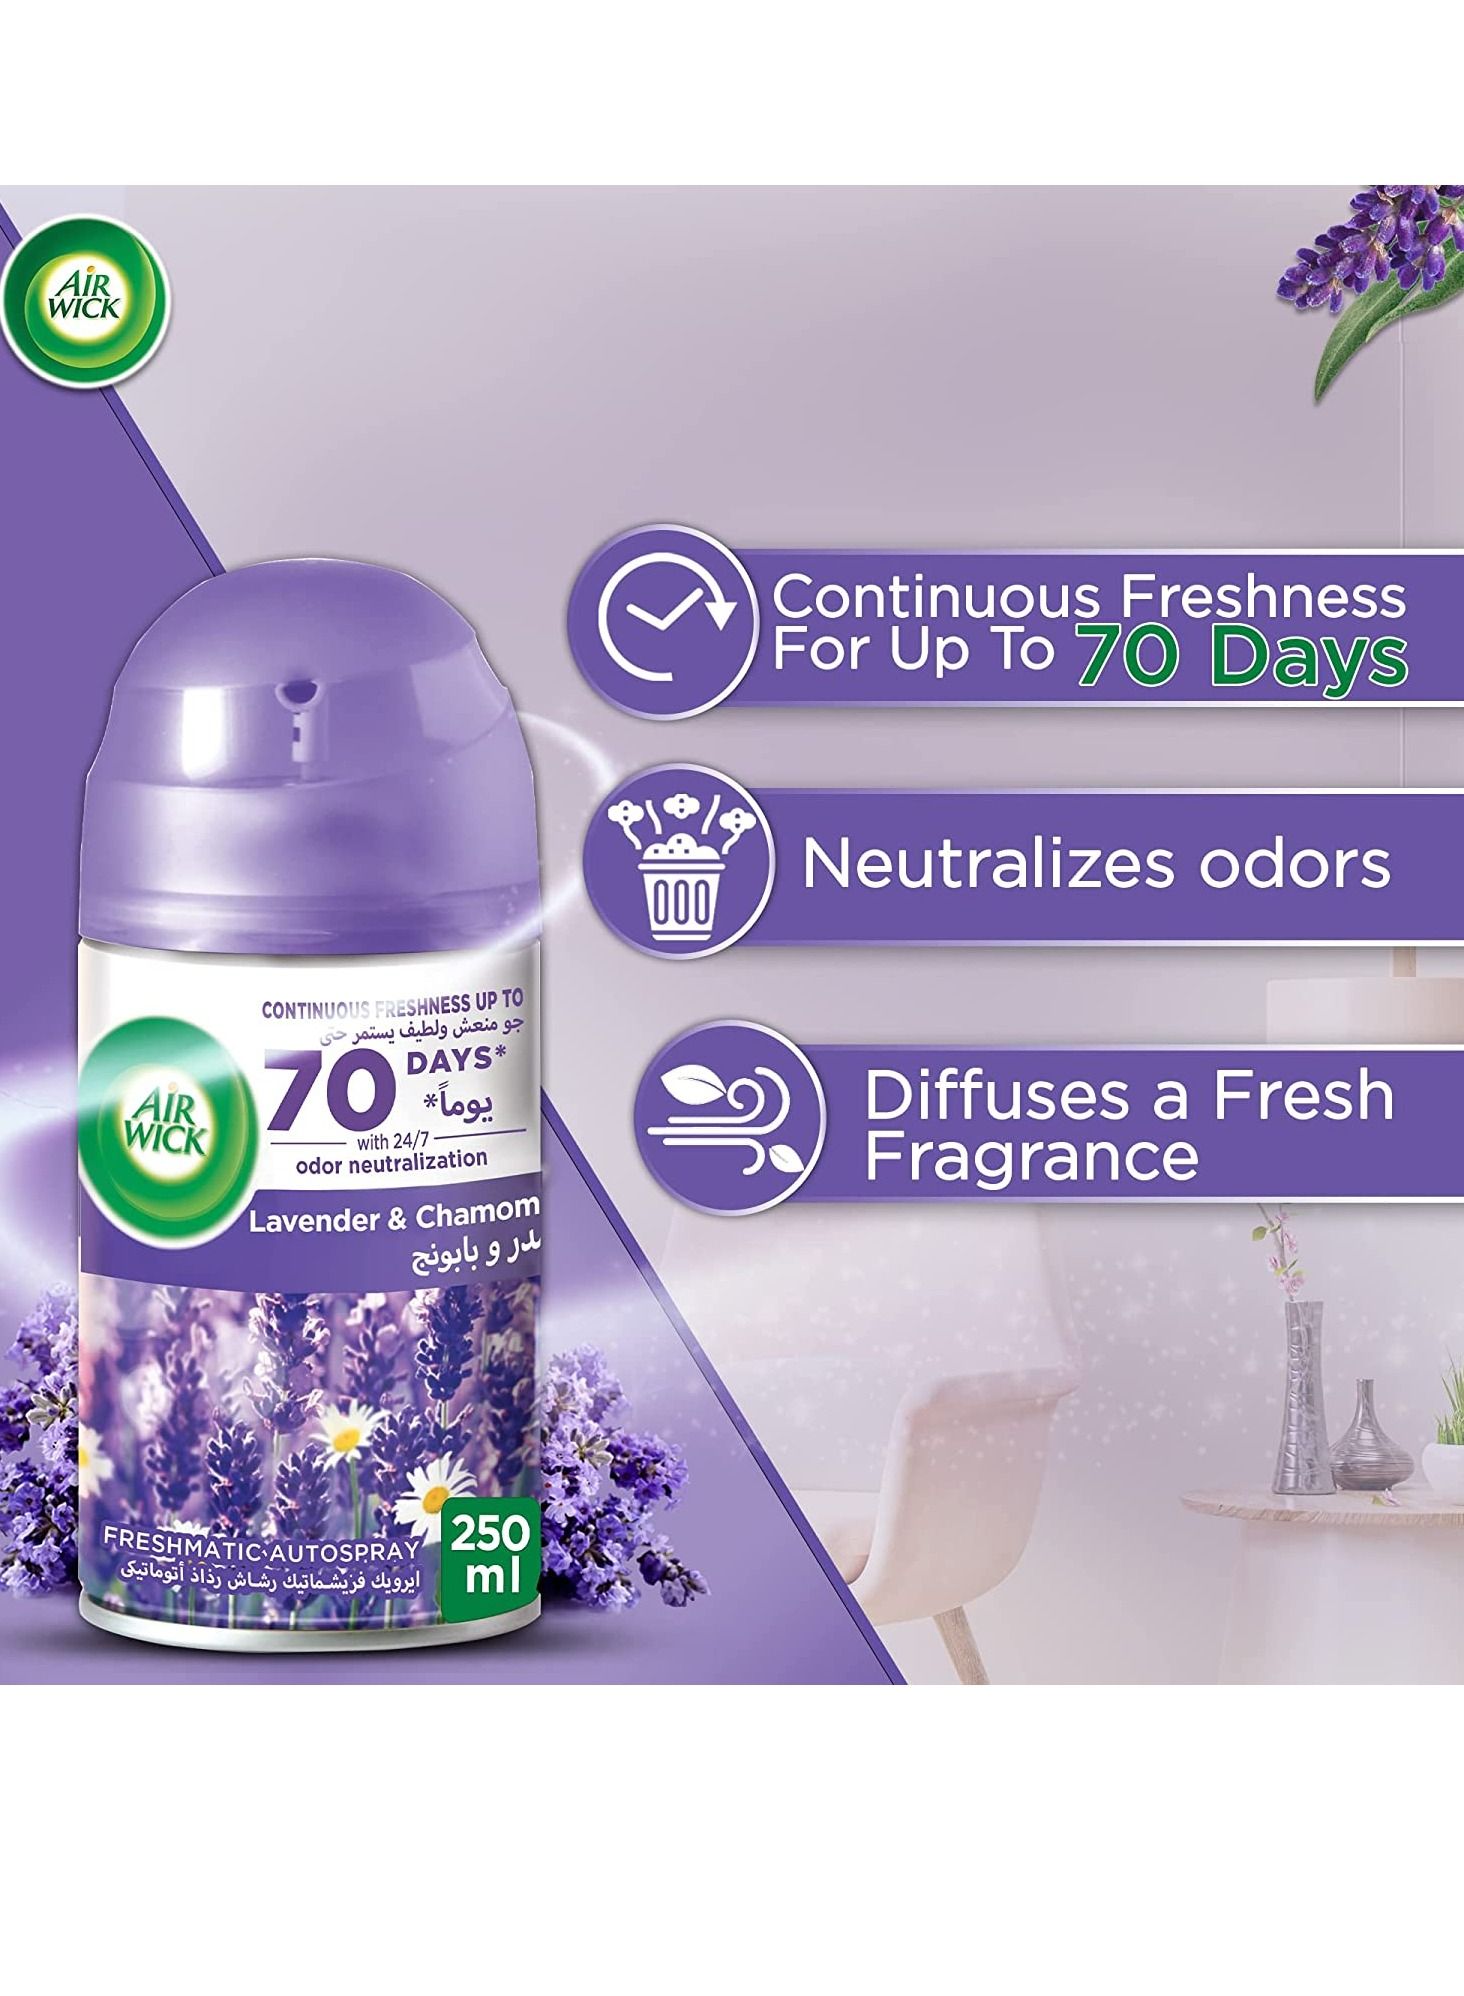 Air wick Air Freshener Freshmatic Auto Spray Lavender & Chamomile Gadget and 1 Refill 250 Ml 